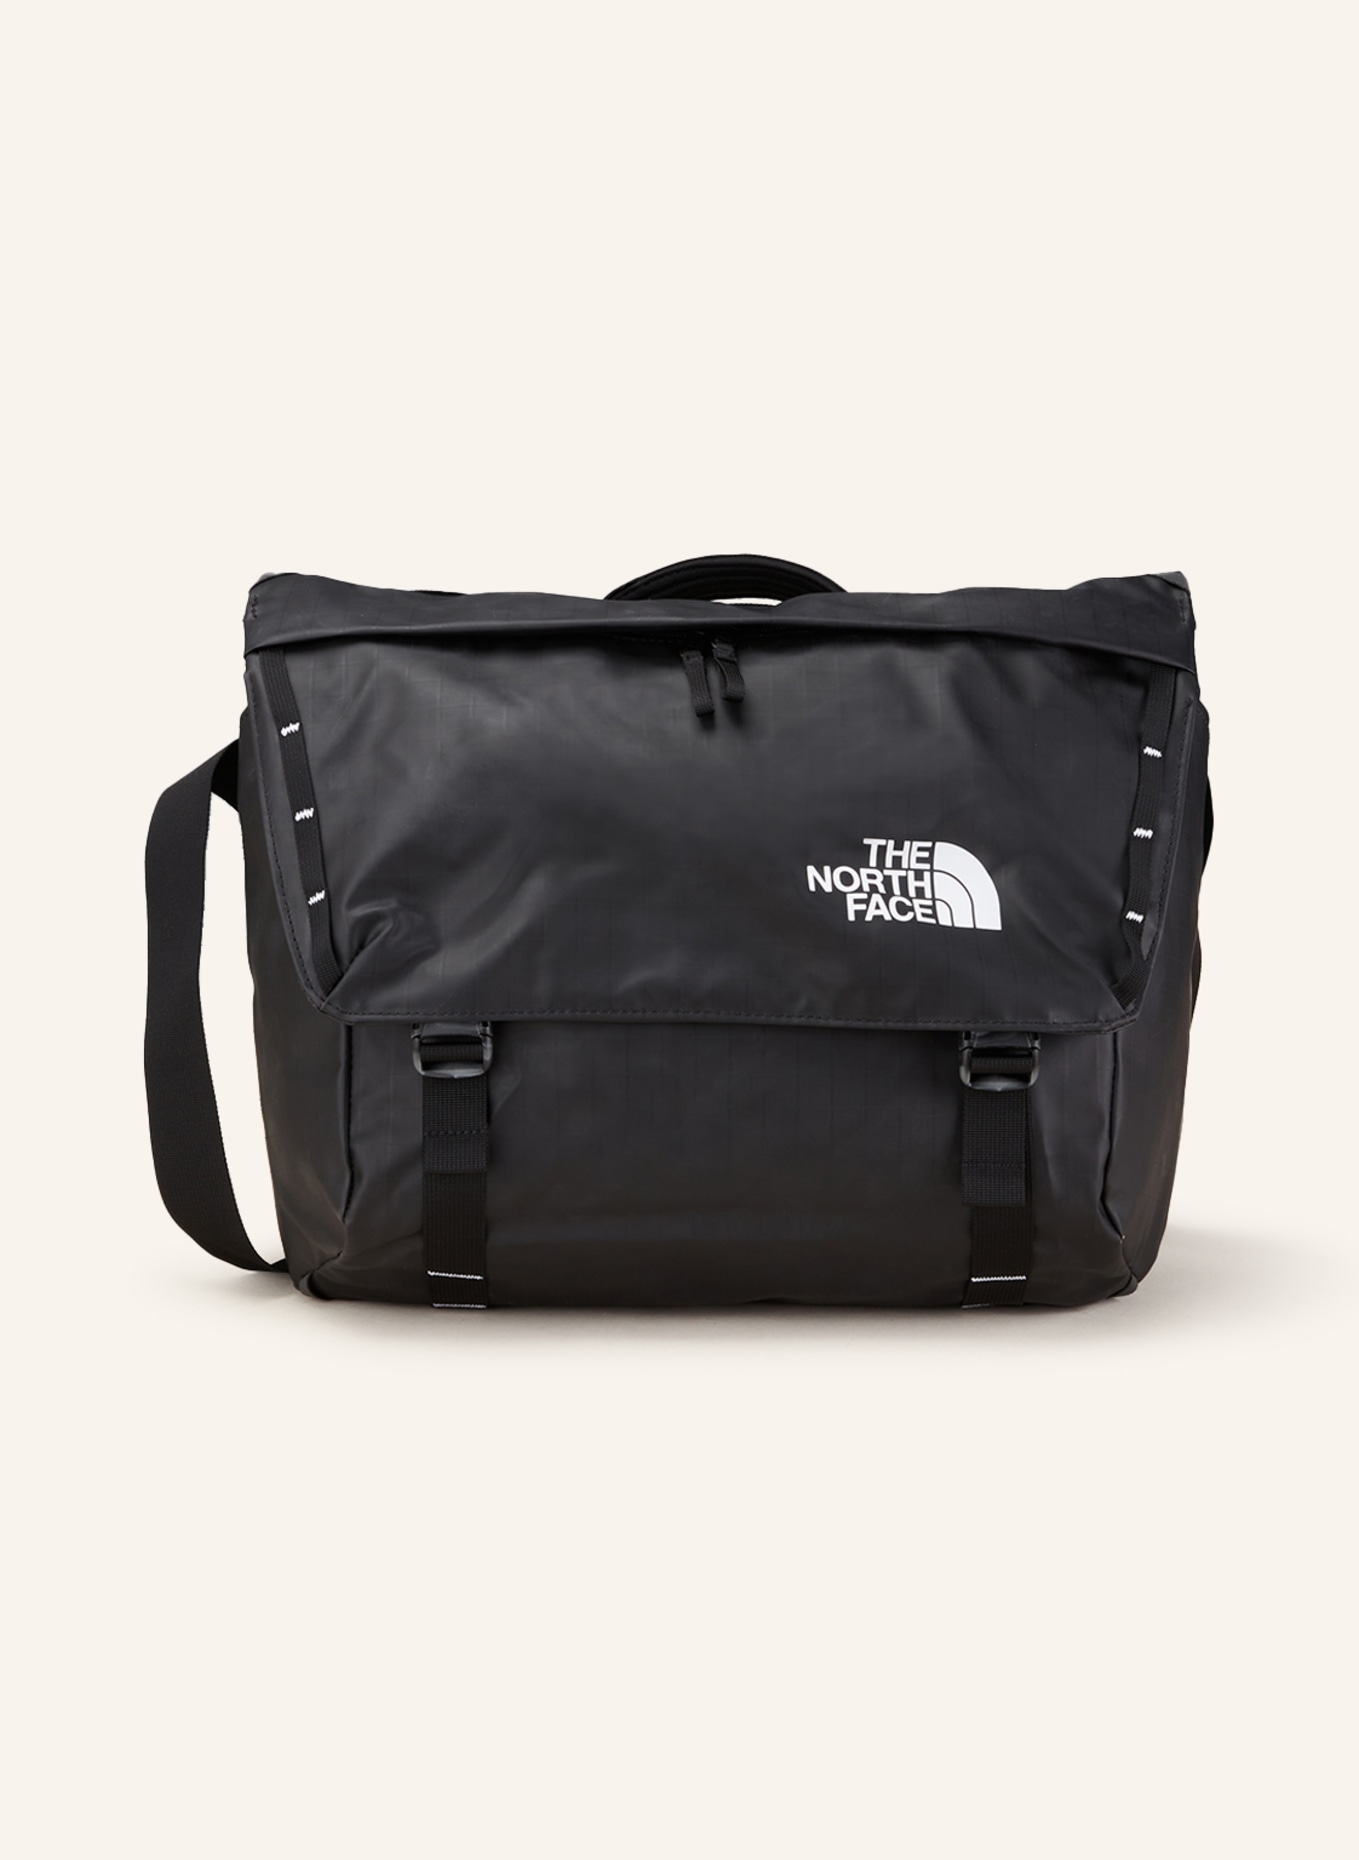 The north face Jester Crossbody Bag Mini travel Pack | eBay